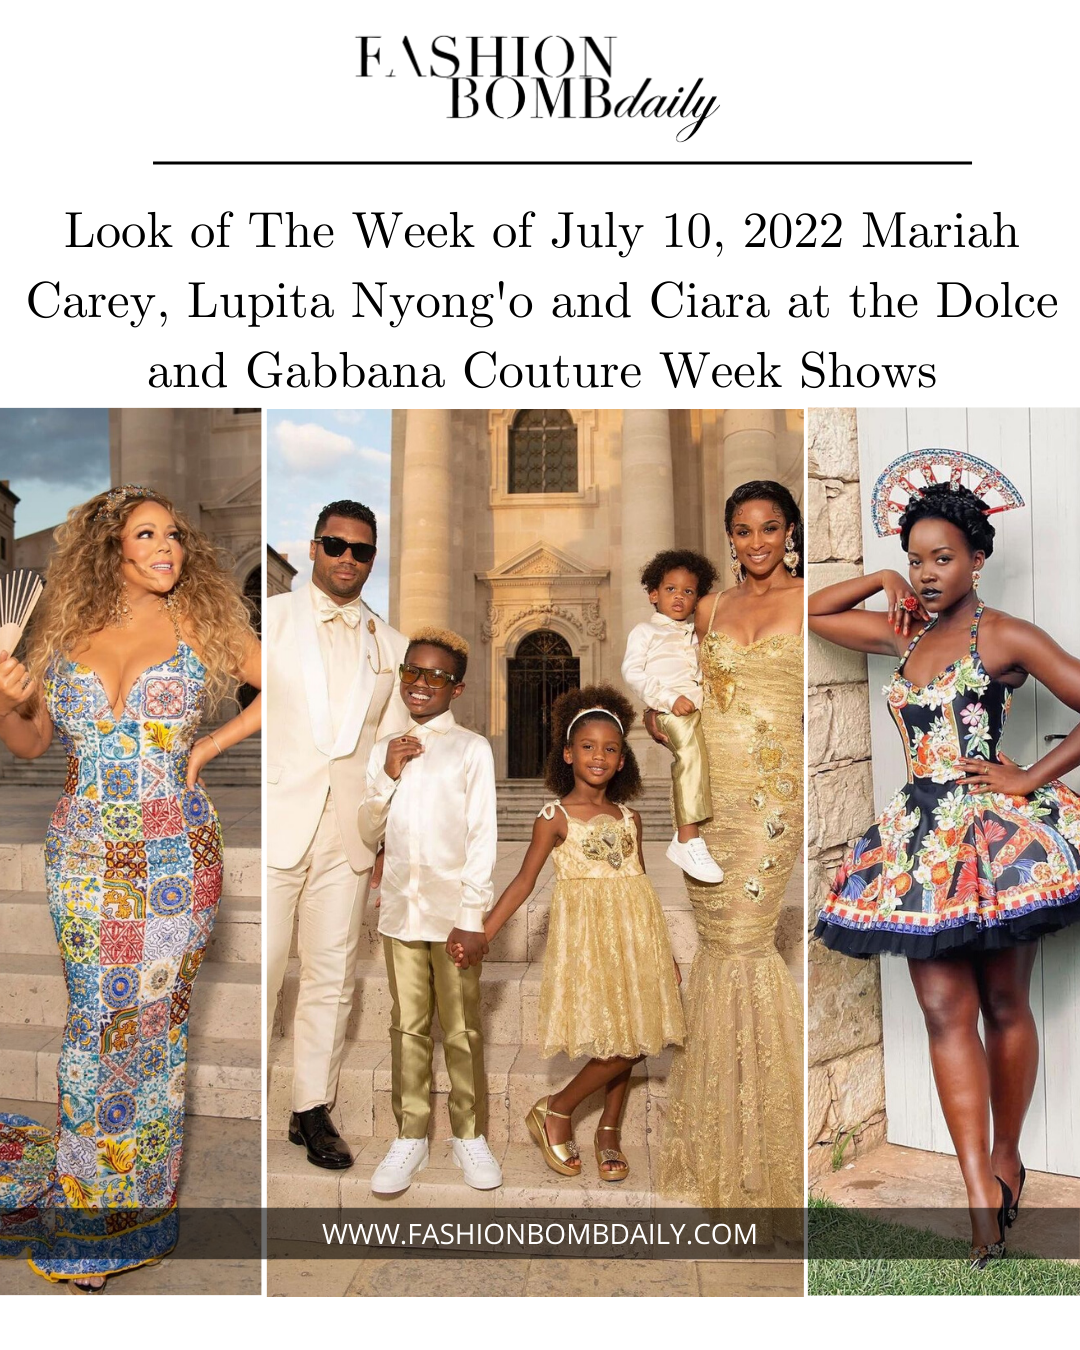 Look of the Week (June 13, 2022): Gabrielle Union in Milan Wearing